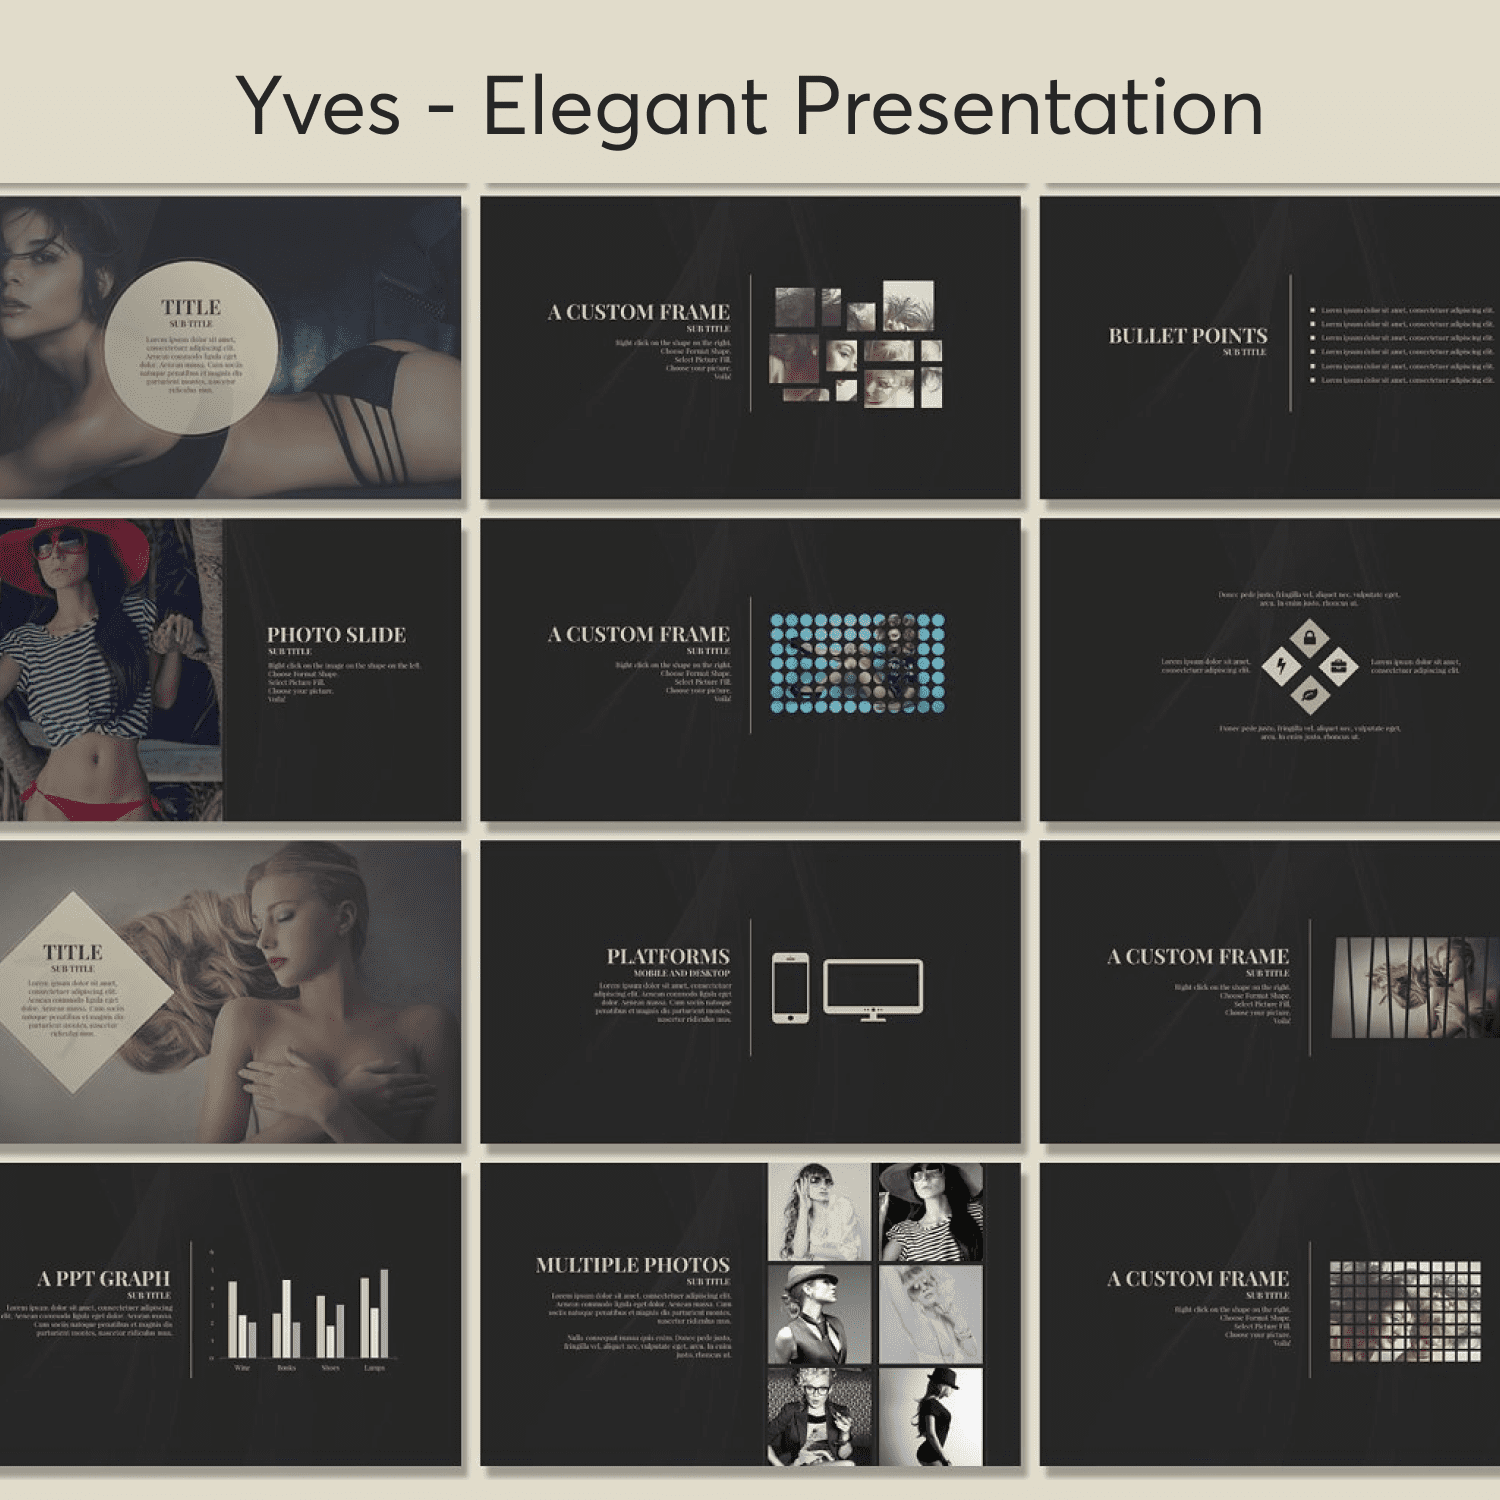 Yves - Elegant Presentation cover.